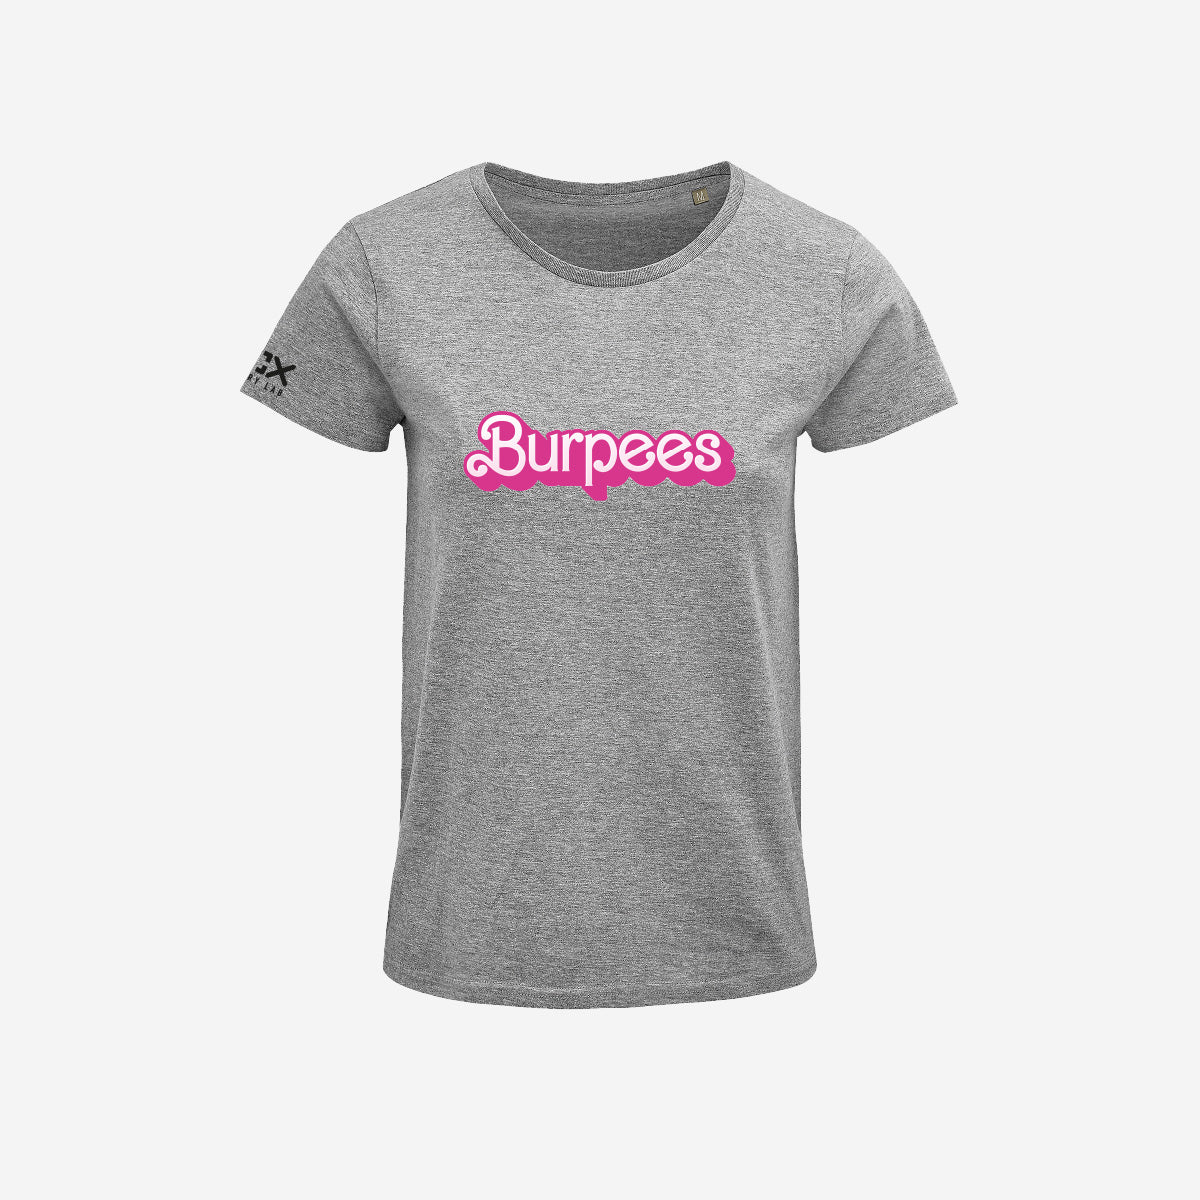 T-shirt Donna - Burpees